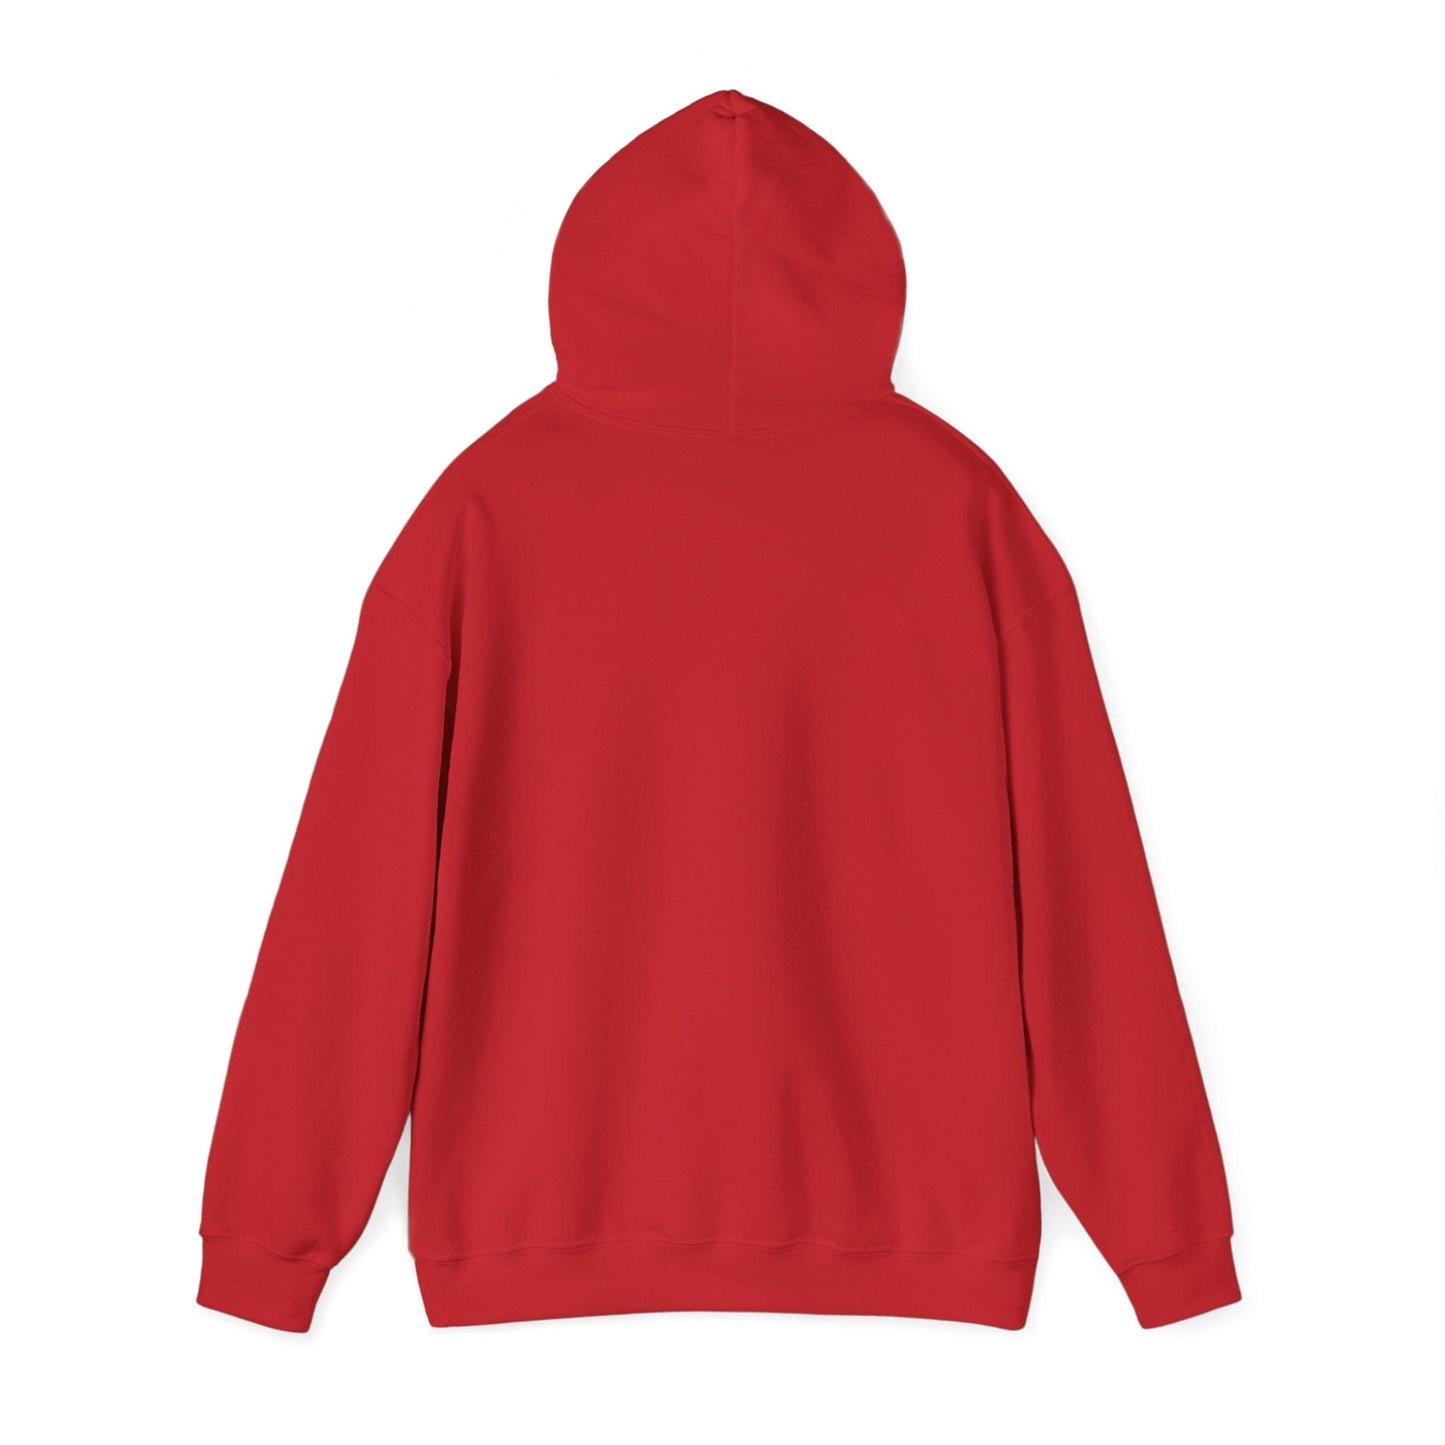 Nana Is My Name Spoiling Is My Game Unisex Heavy Blend™ Hooded Sweatshirt